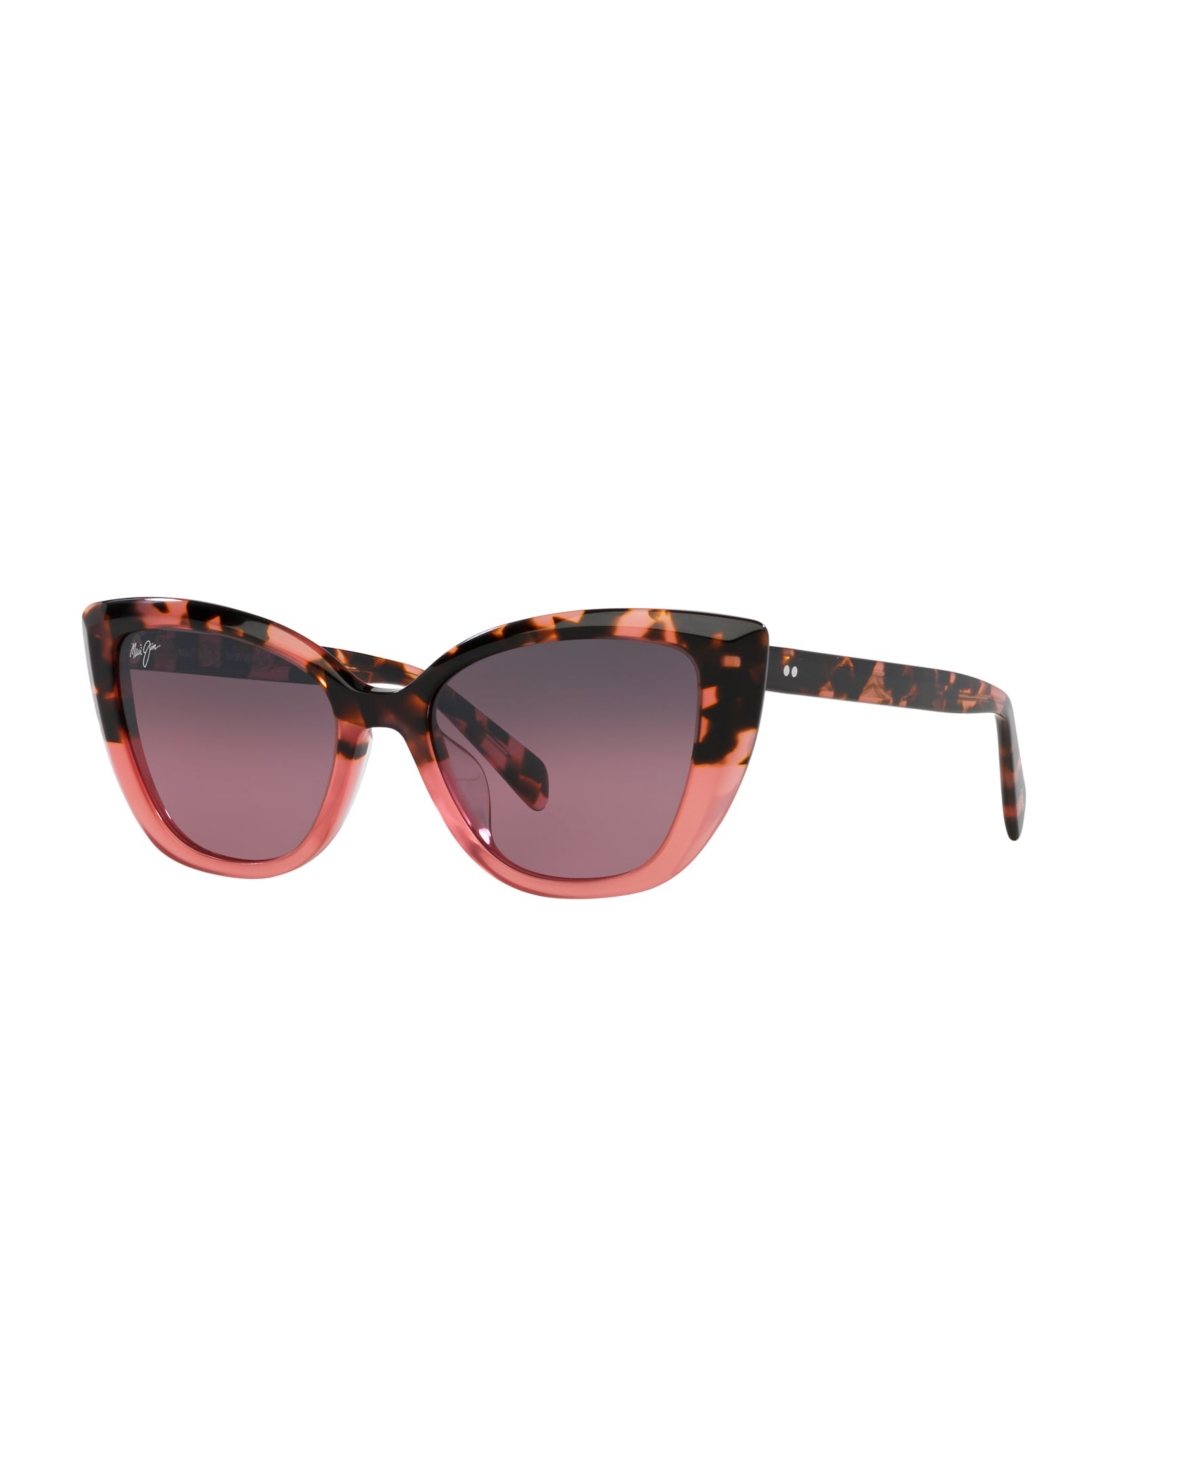 Maui Jim Women's Polarized Sunglasses, Blossom Mj000736 In Pink